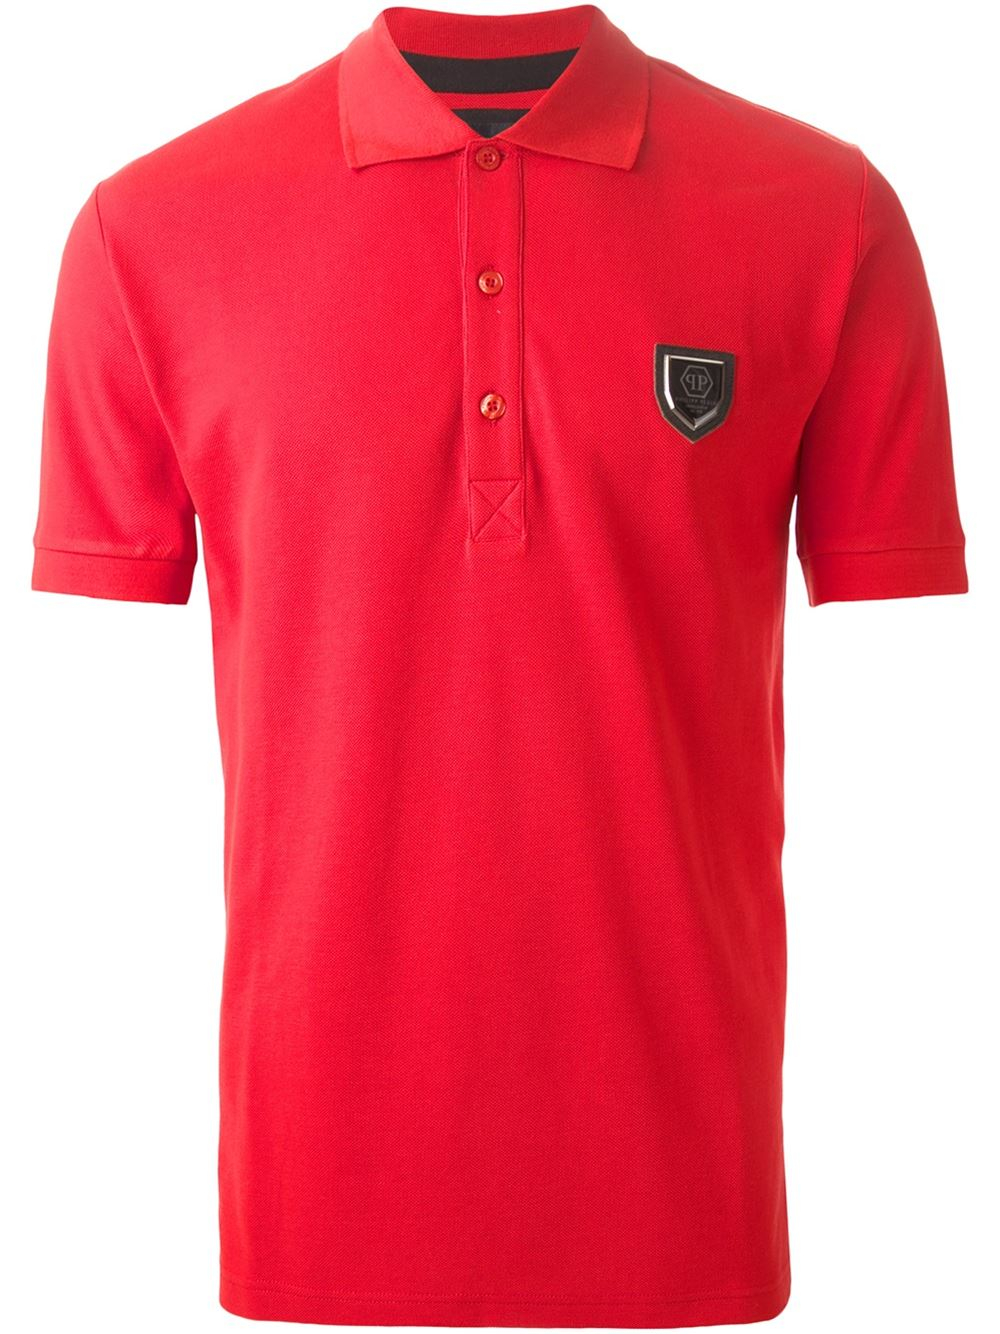 Philipp plein 'Escape' Polo Shirt in Red for Men | Lyst